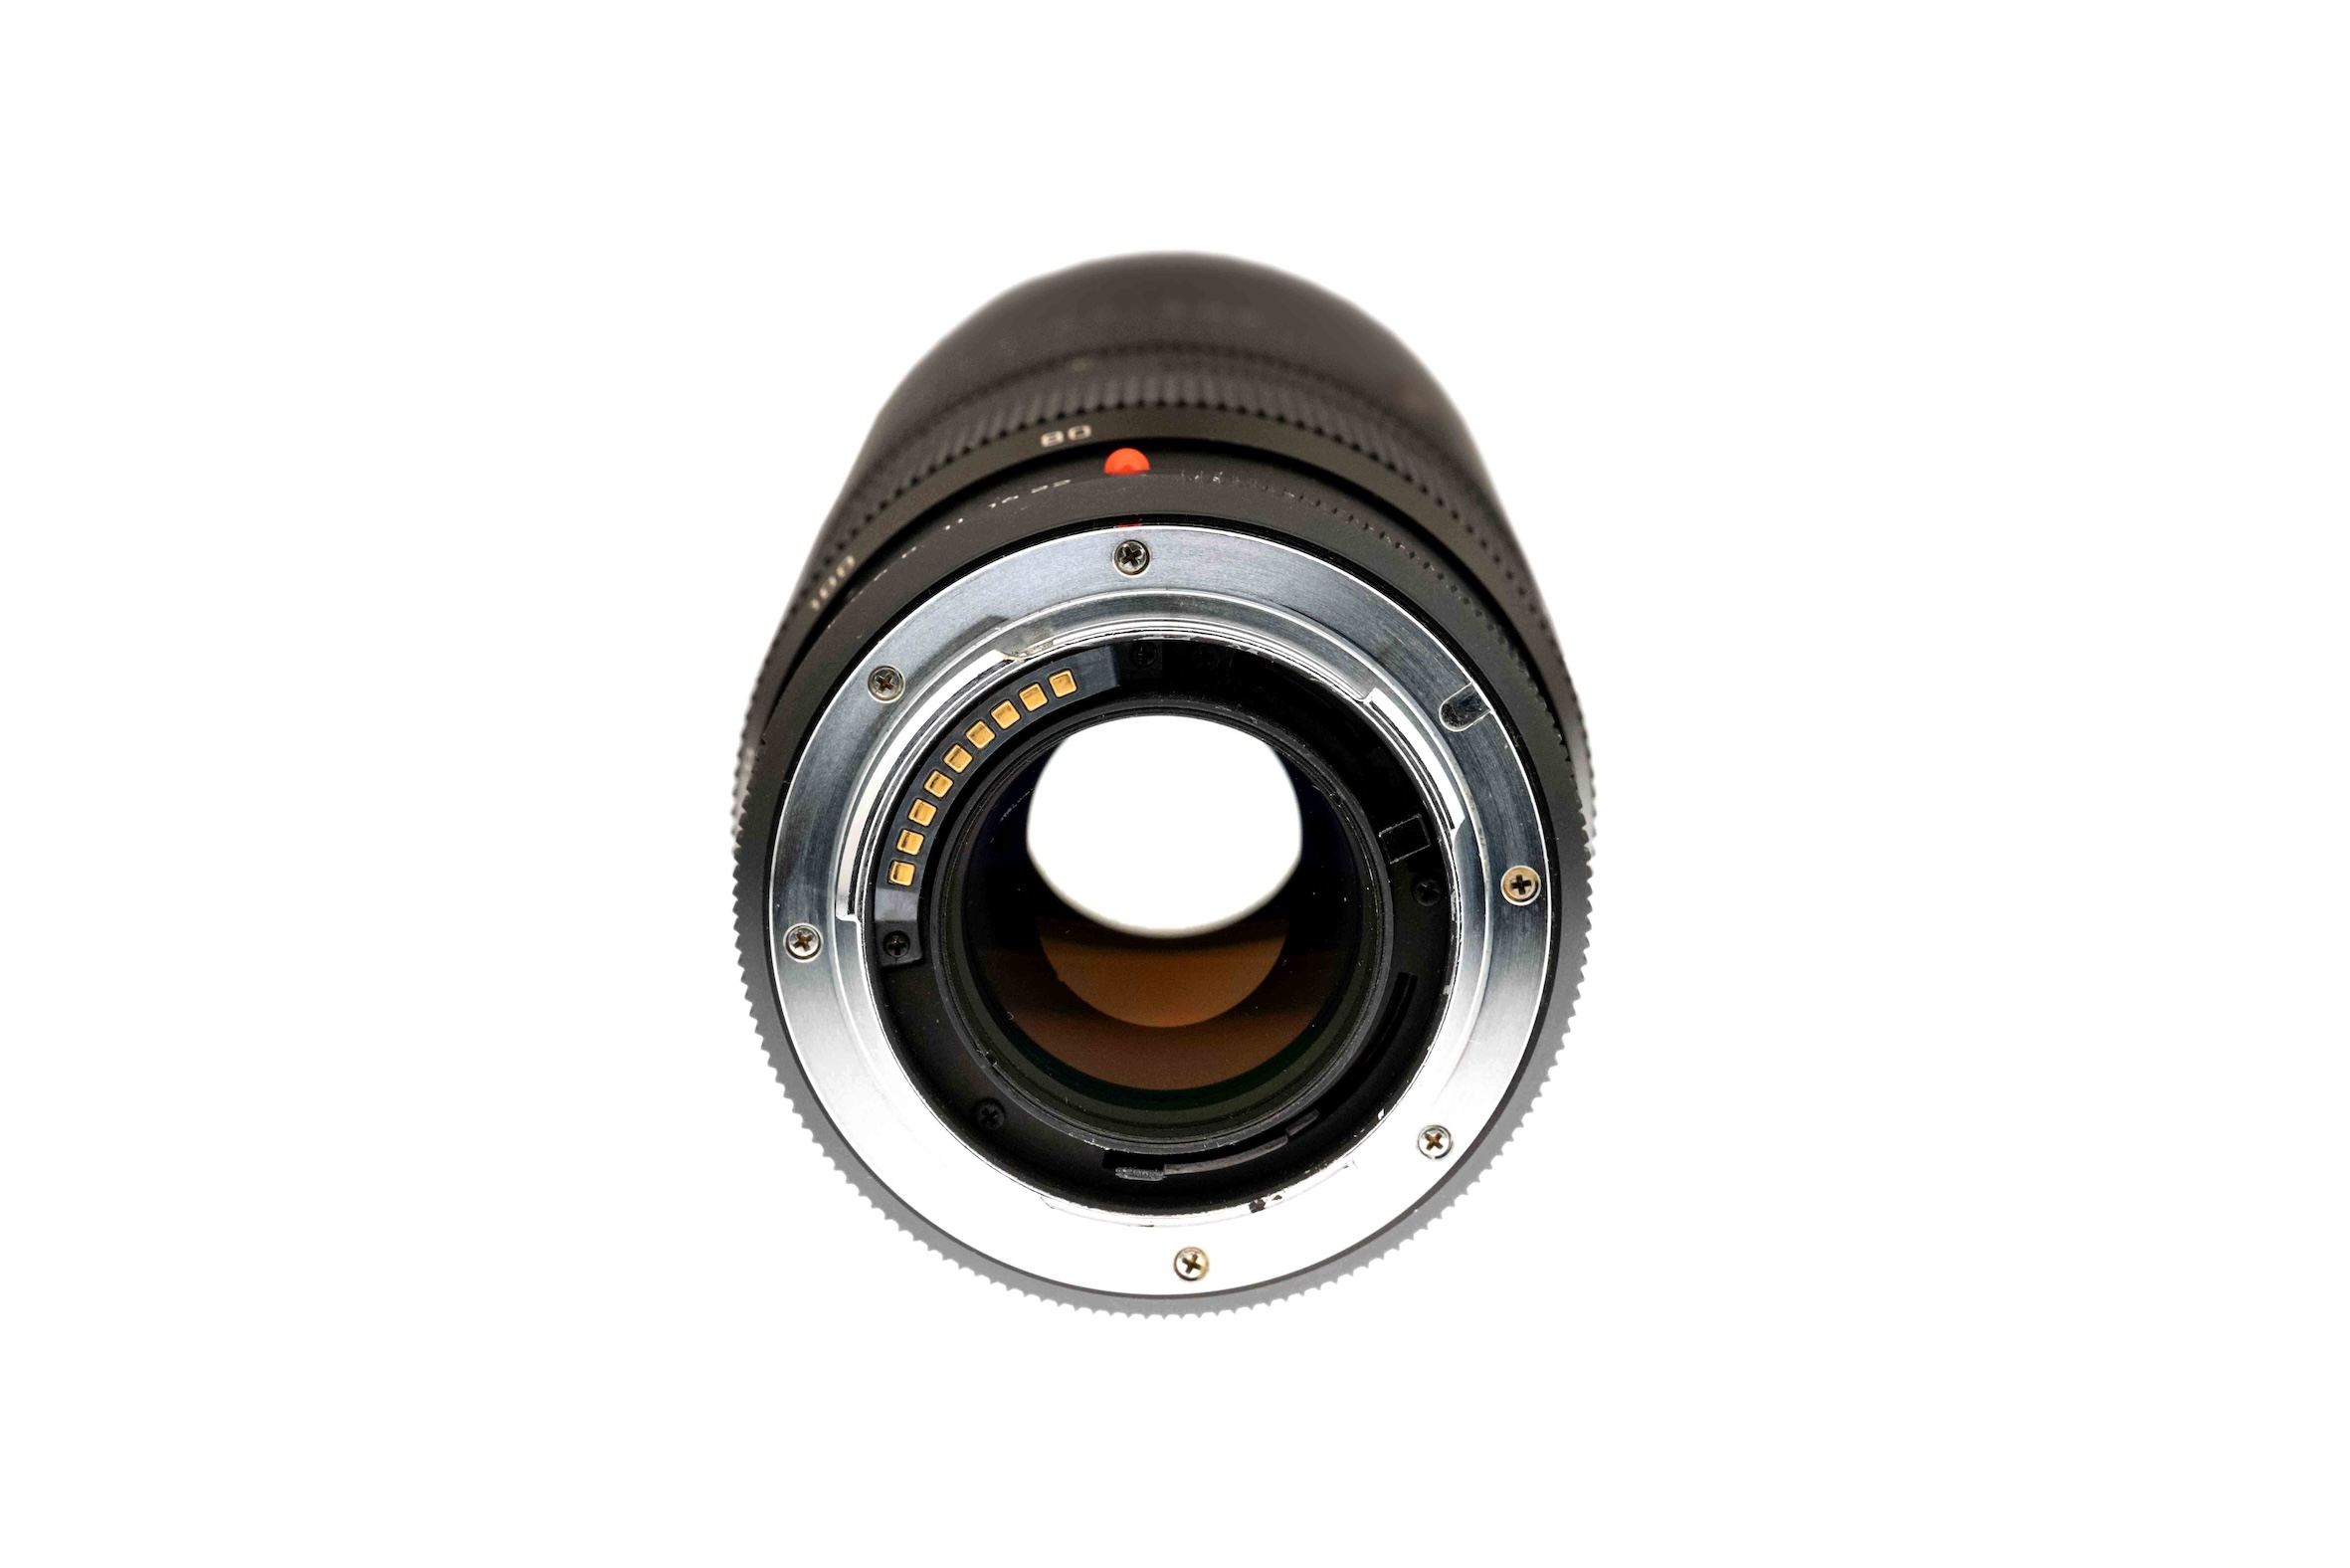 Leica Vario-Elmar-R 1:4/80-200mm